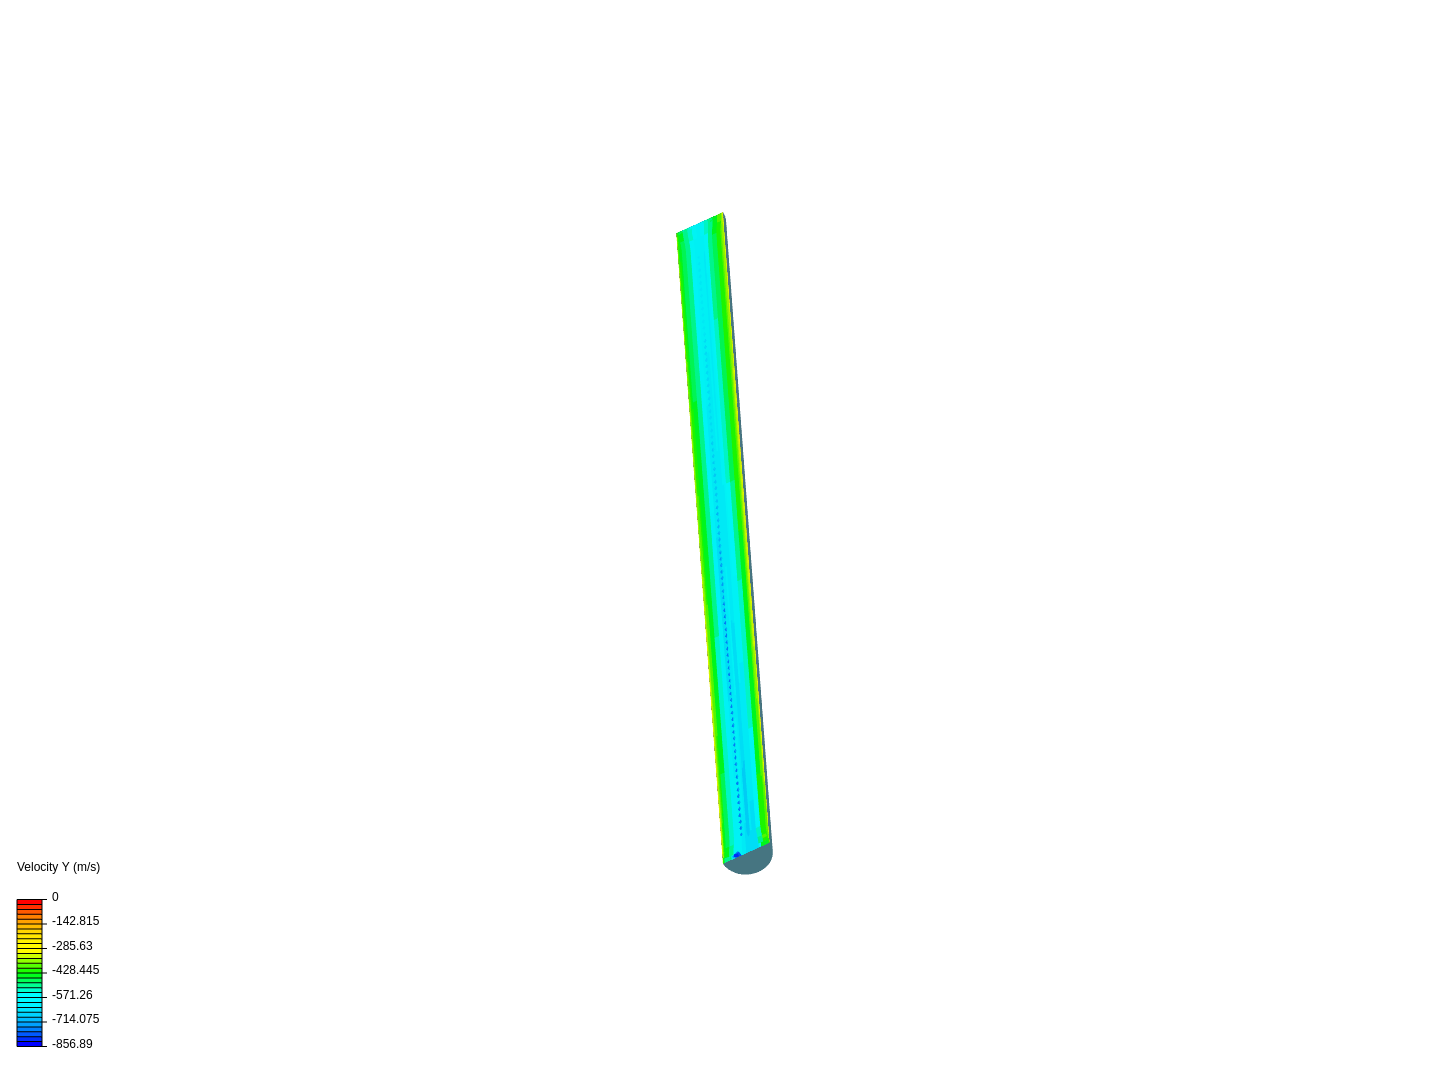 Pipe 1m with 0.05m Diameter image